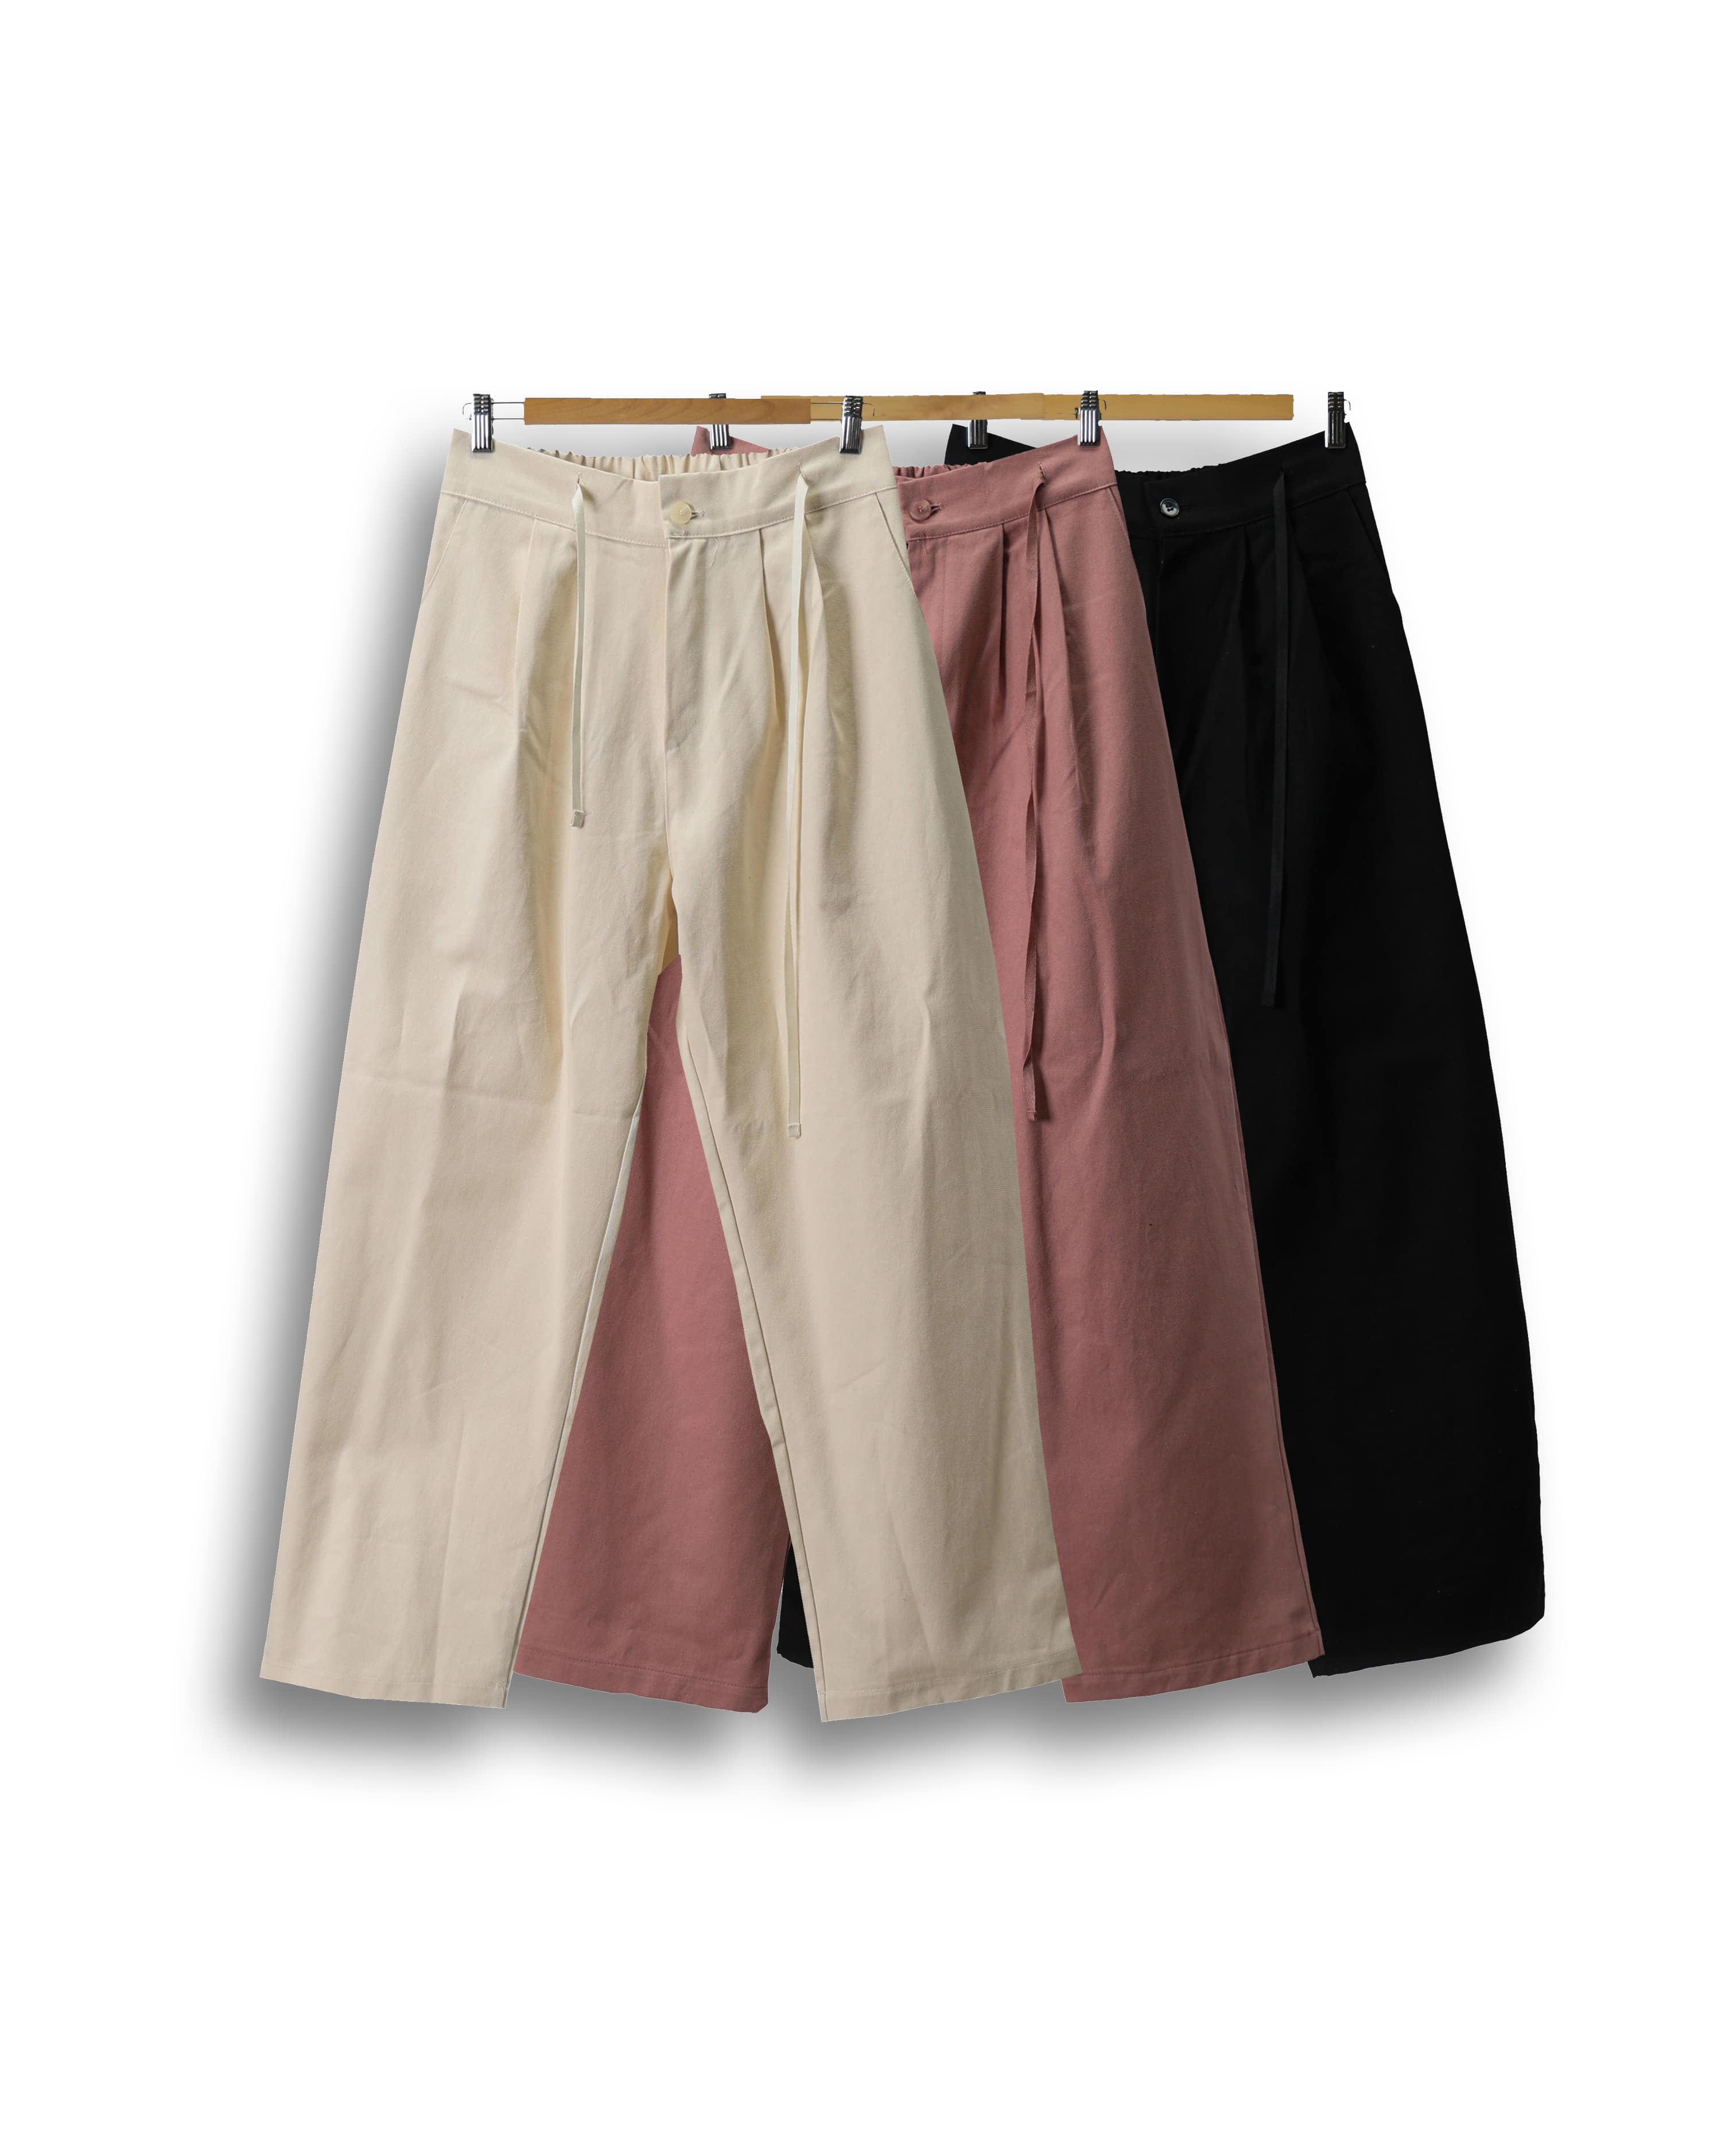 GRUS Daily Pintuck Line Balloon Pants (Black/Pink/Ivory)